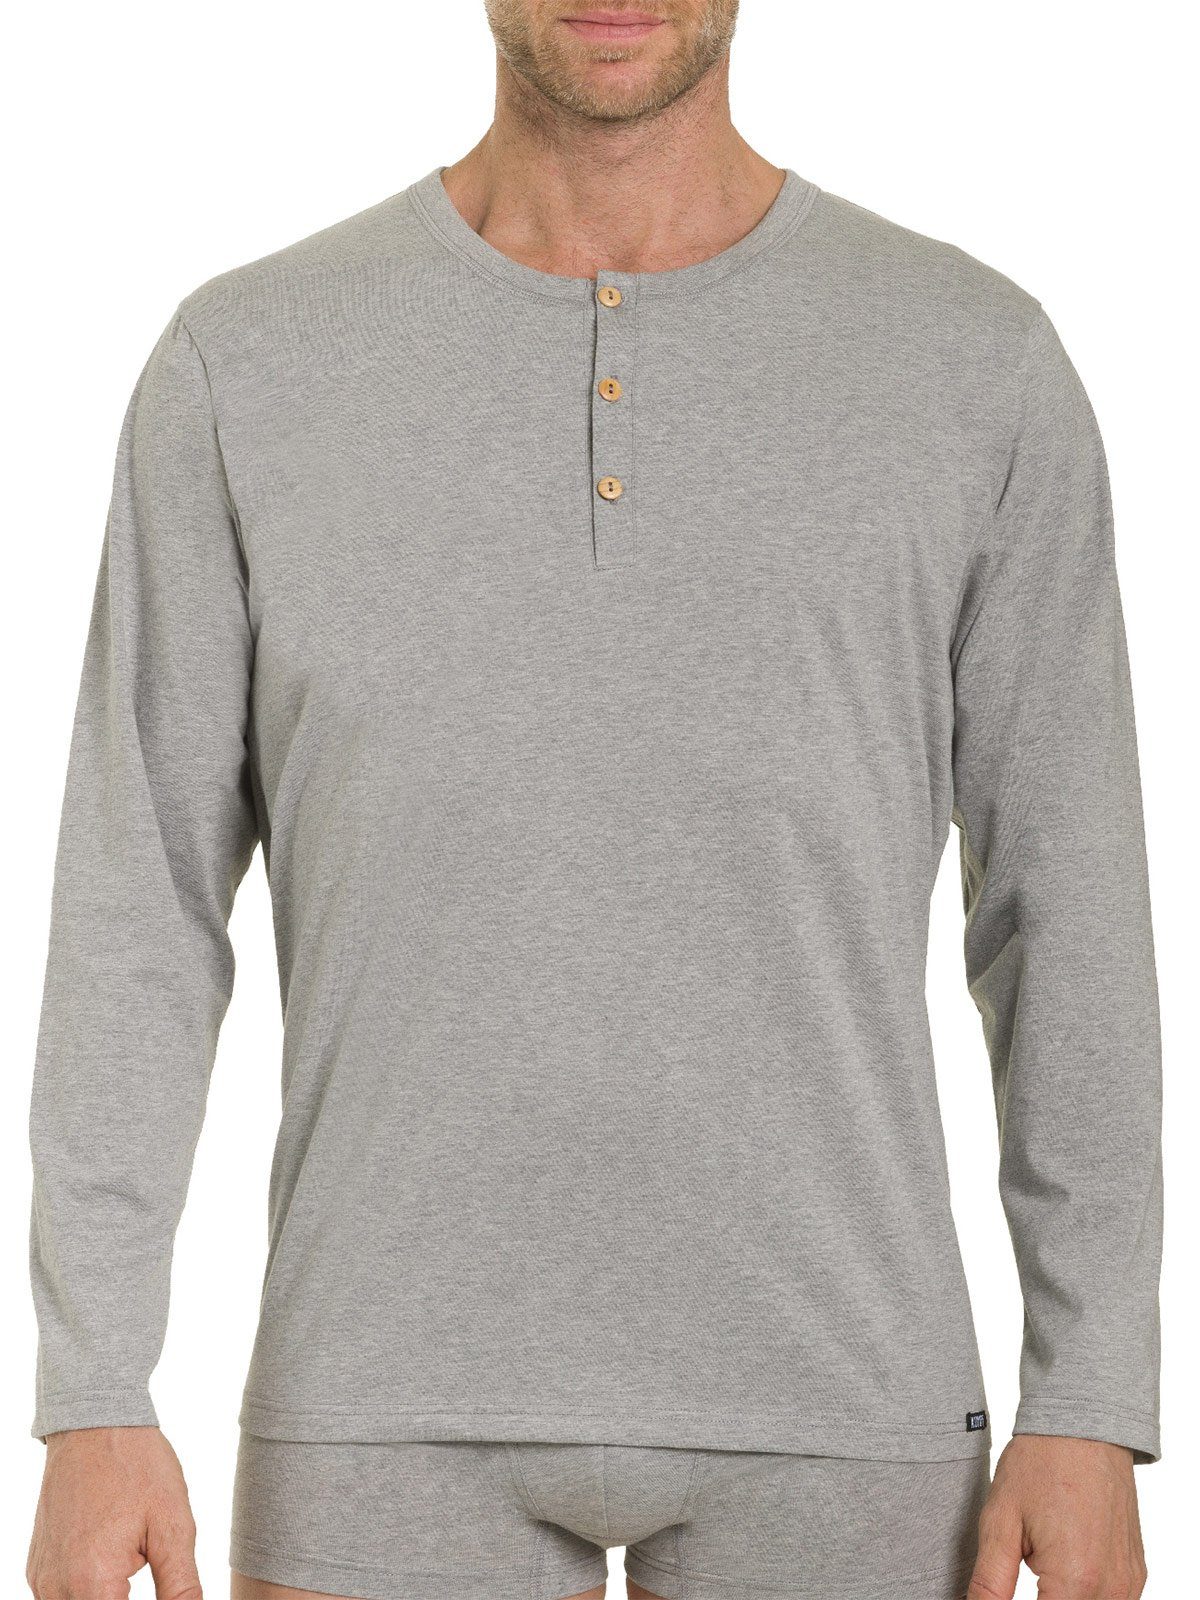 KUMPF Bio Unterhemd Cotton langarm stahlgrau-melange Markenqualität 1-St) hohe (Stück, Shirt Herren